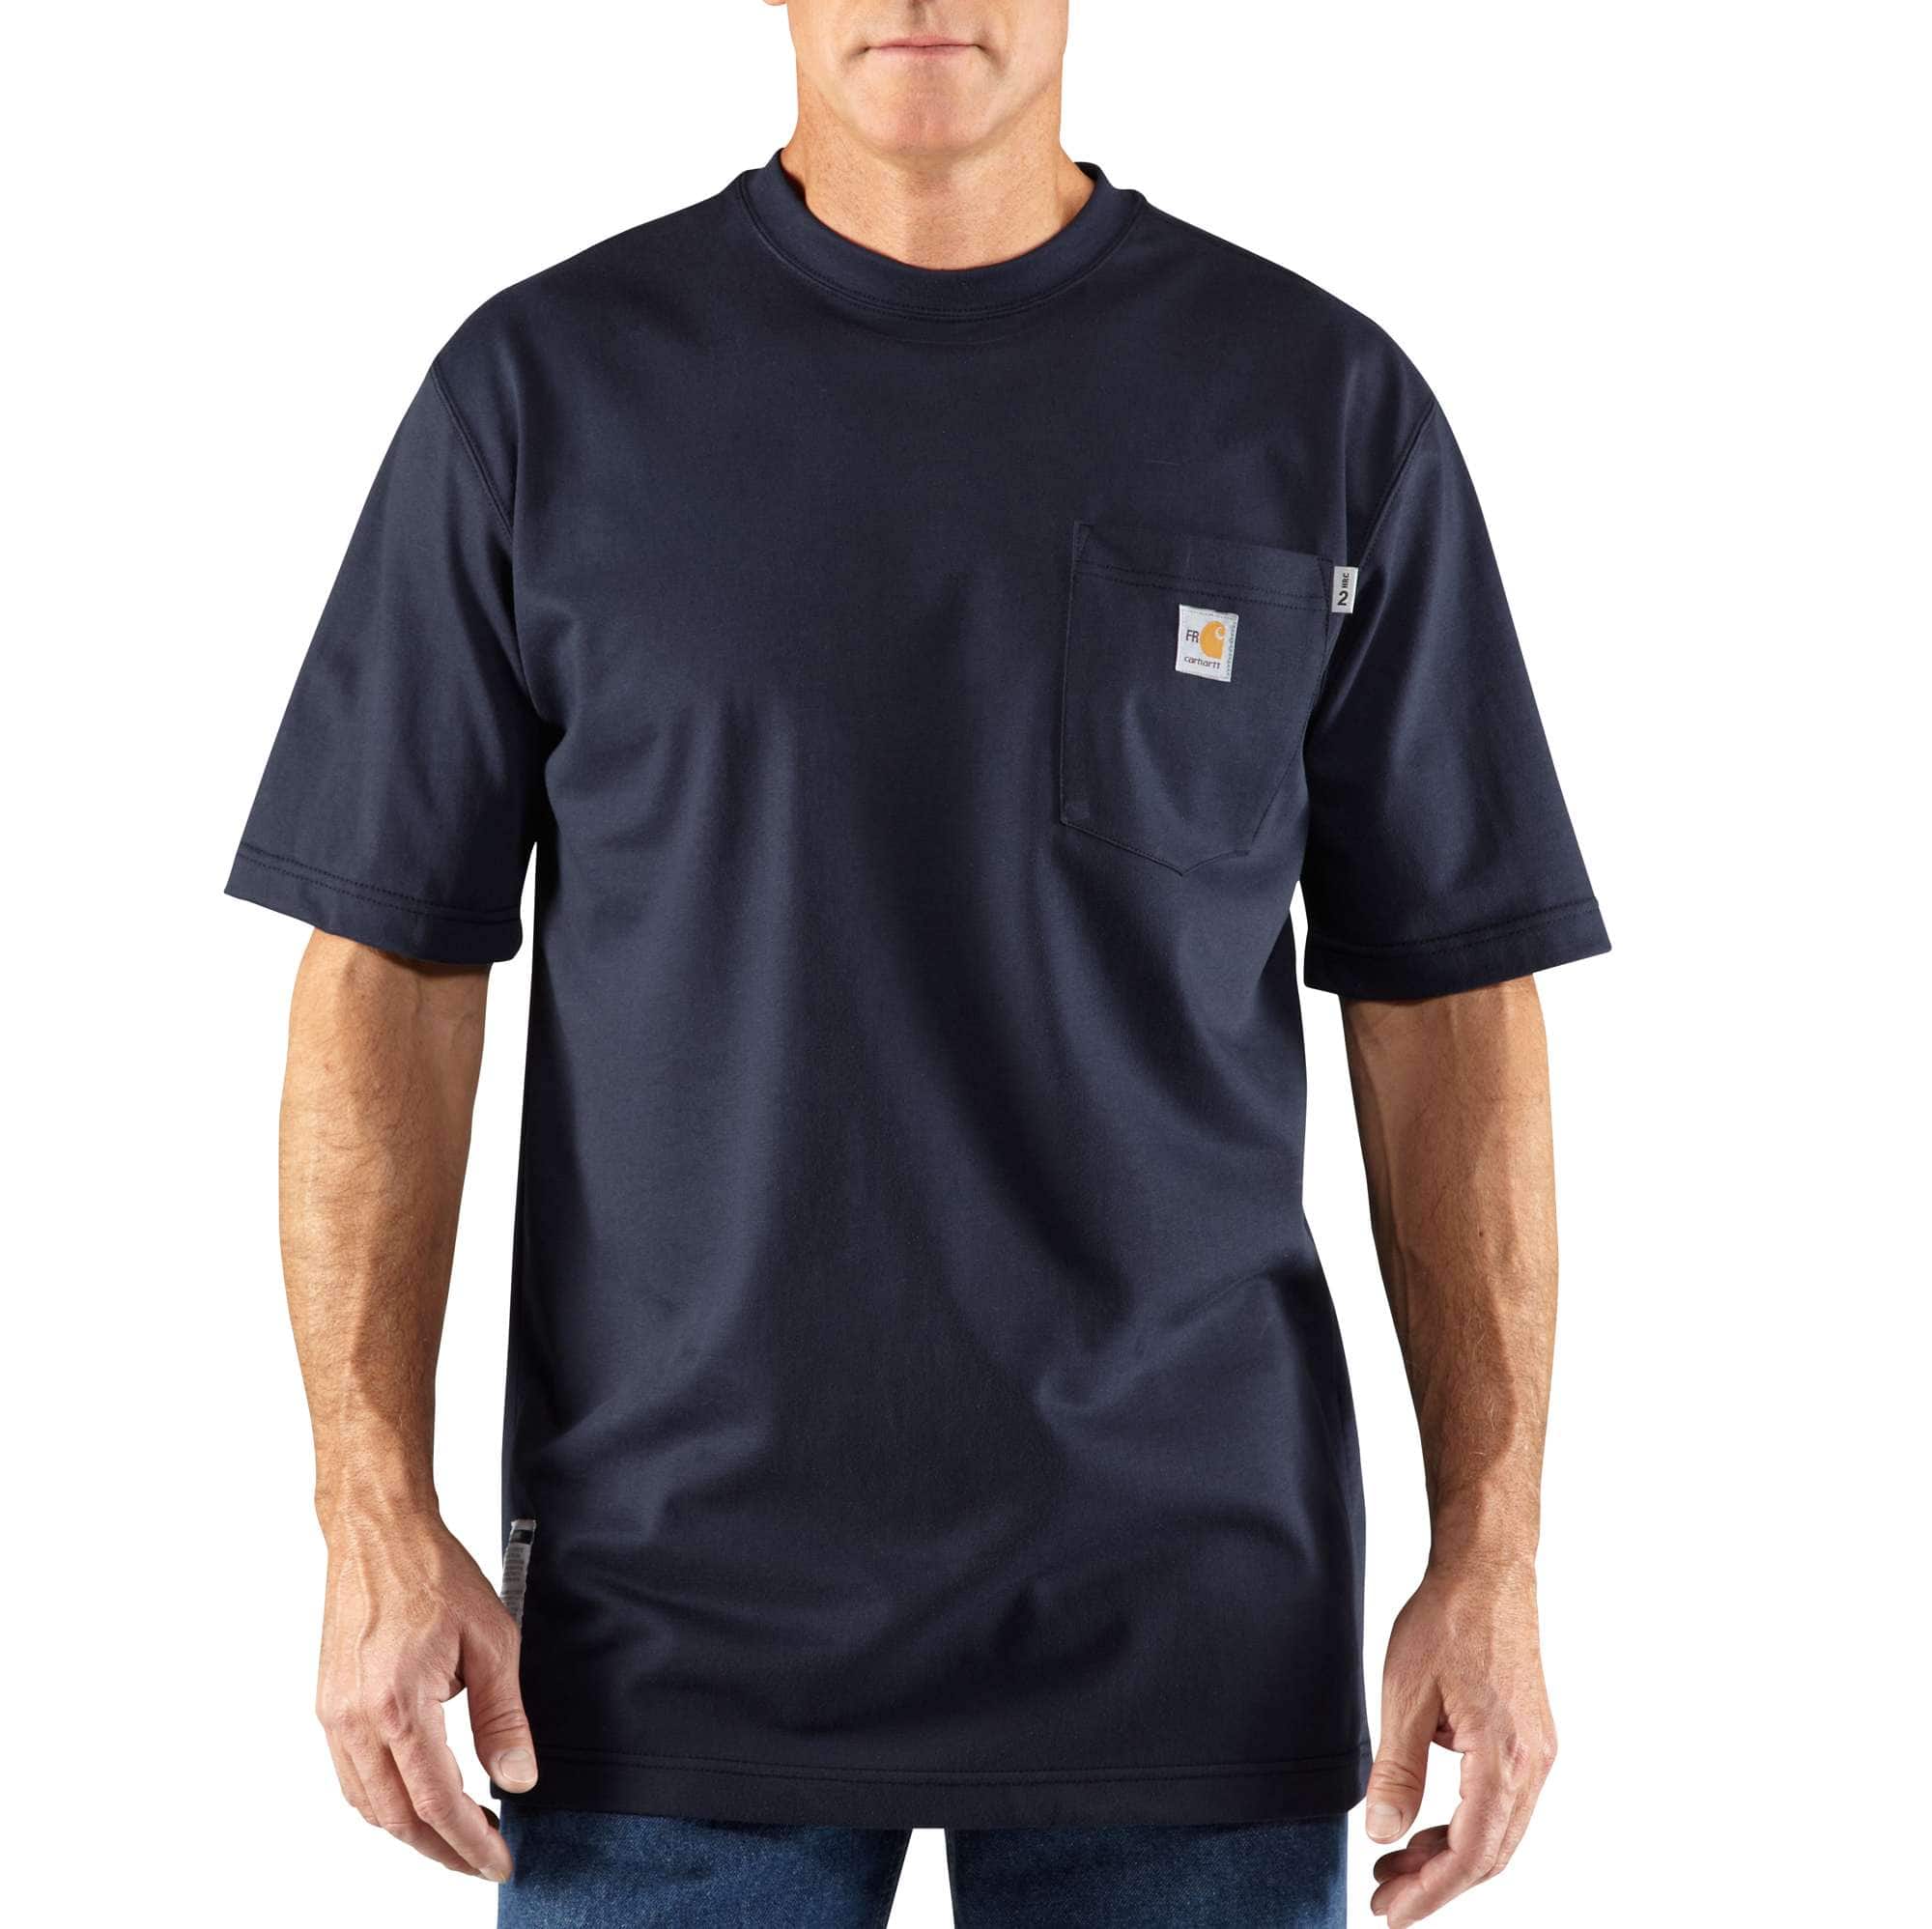 Men | T-shirts & Company Uniform Gear for Tees Men\'s Company Carhartt